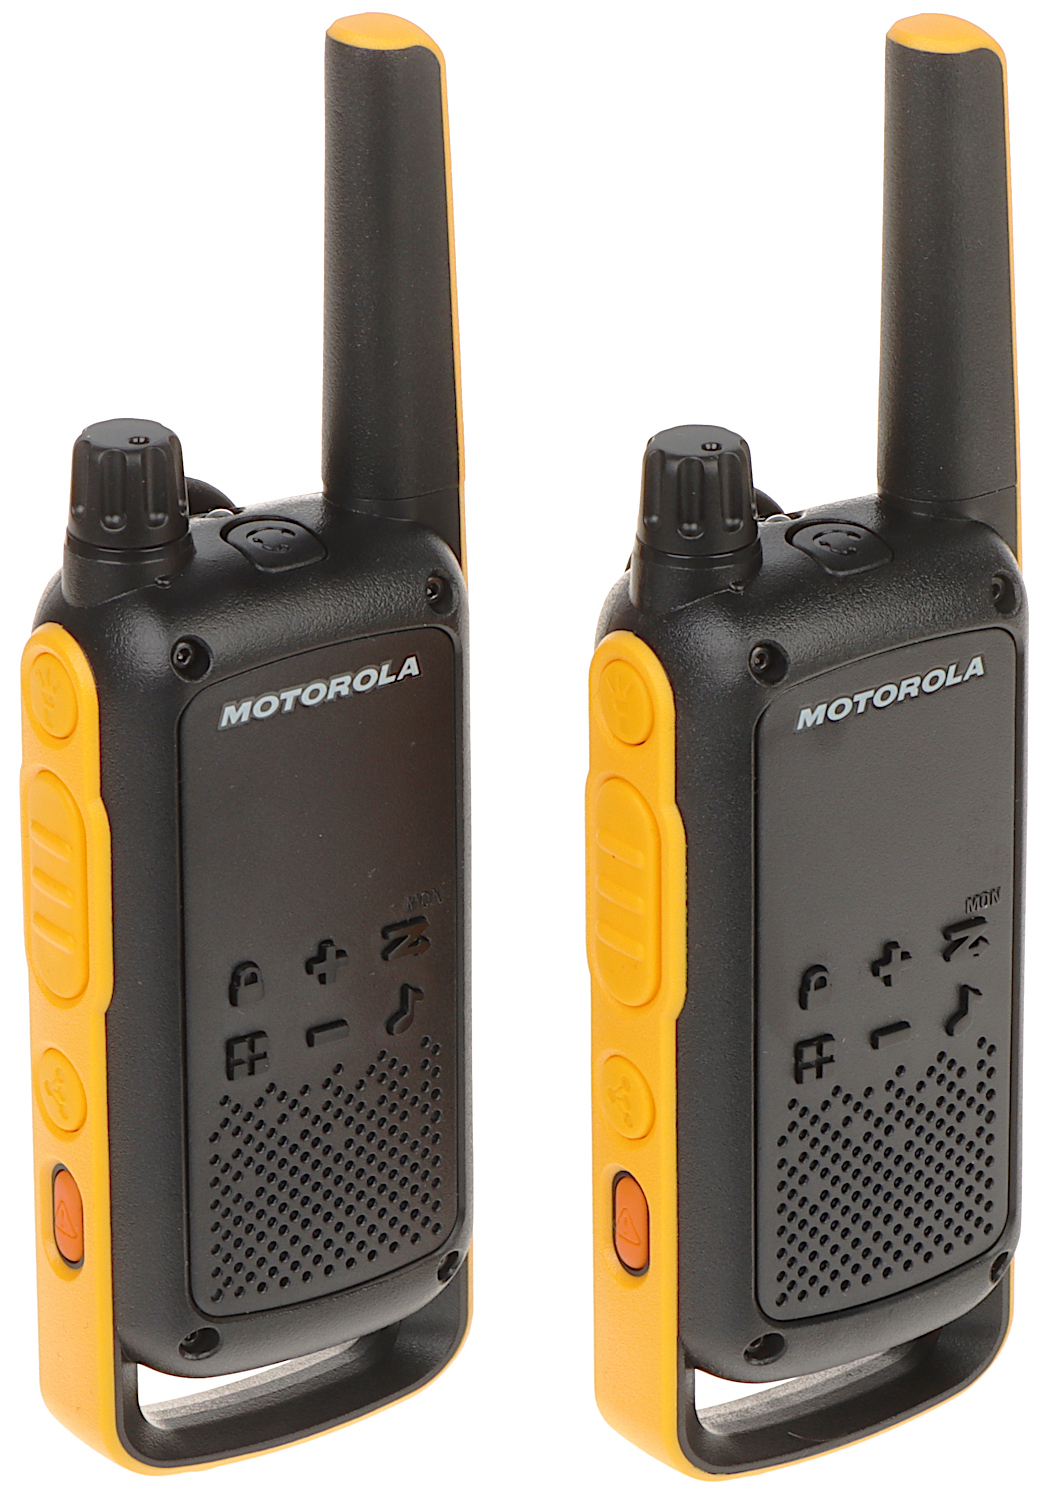 SET OF 2 PMR RADIOS MOTOROLA-T82/EXTREME 446.1 MHz  - Radio  Communication - Delta